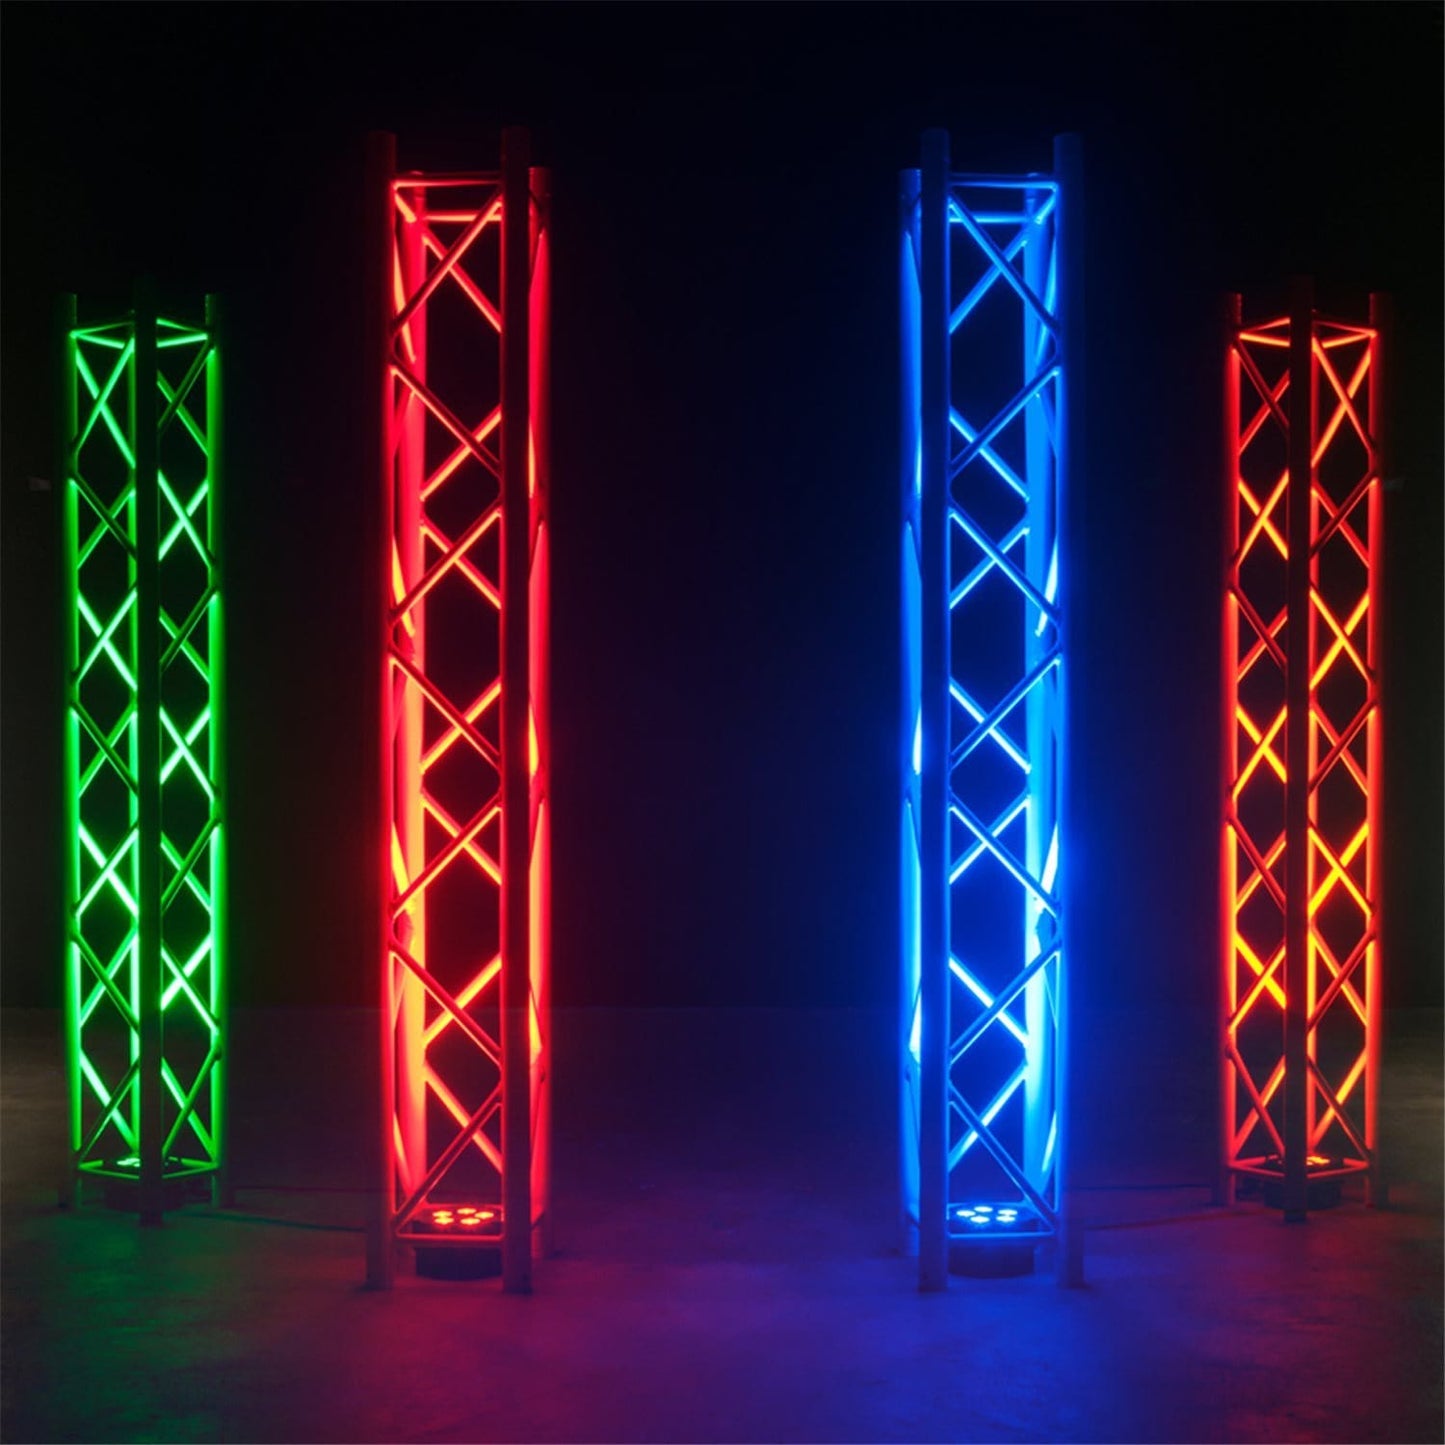 ADJ American DJ 5P Hex RGBAW Plus UV LED DMX Par Wash Light - ProSound and Stage Lighting